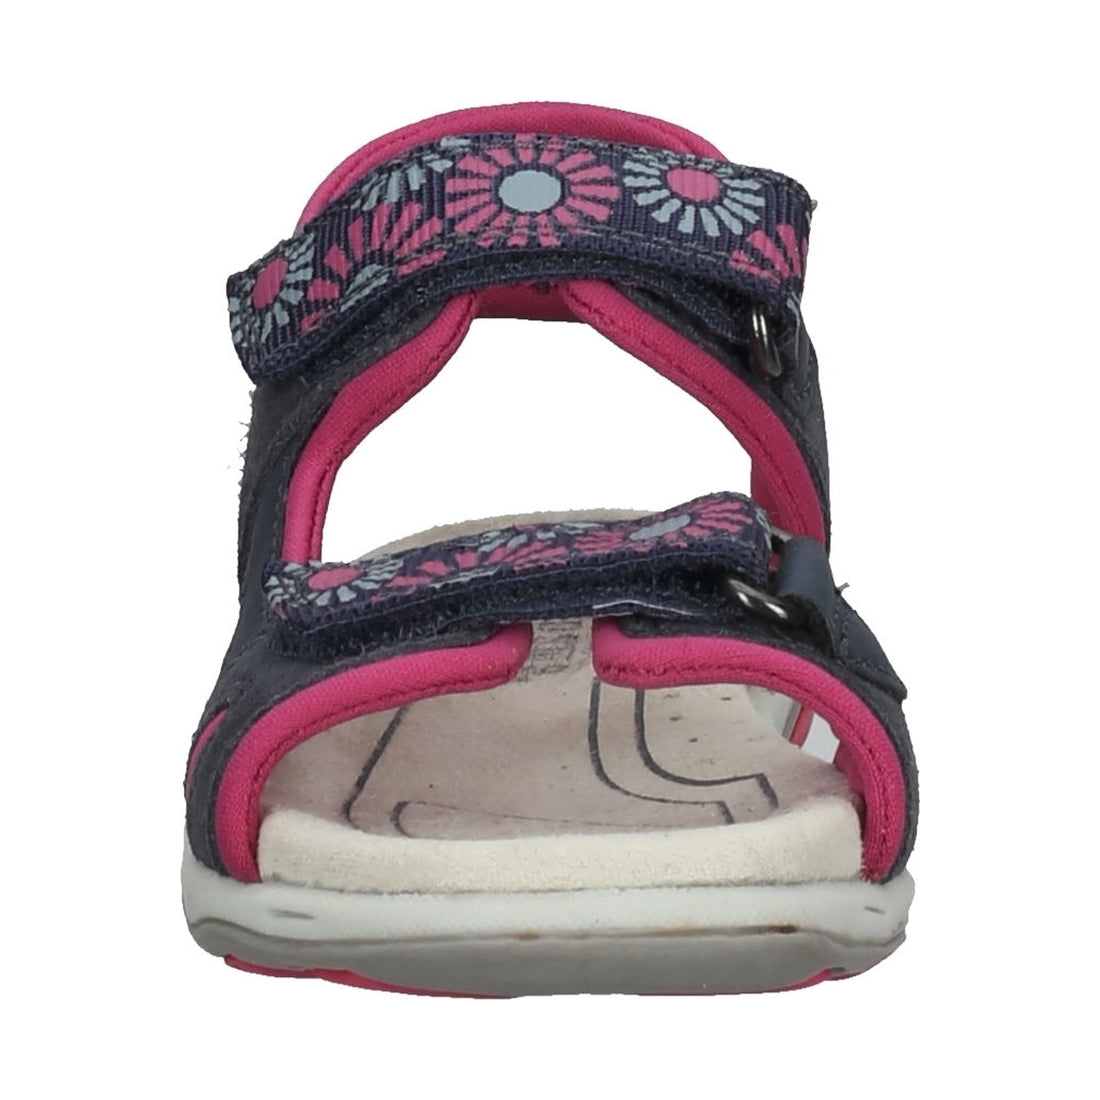 Bama Girls graublau casual open sandals | Vilbury London